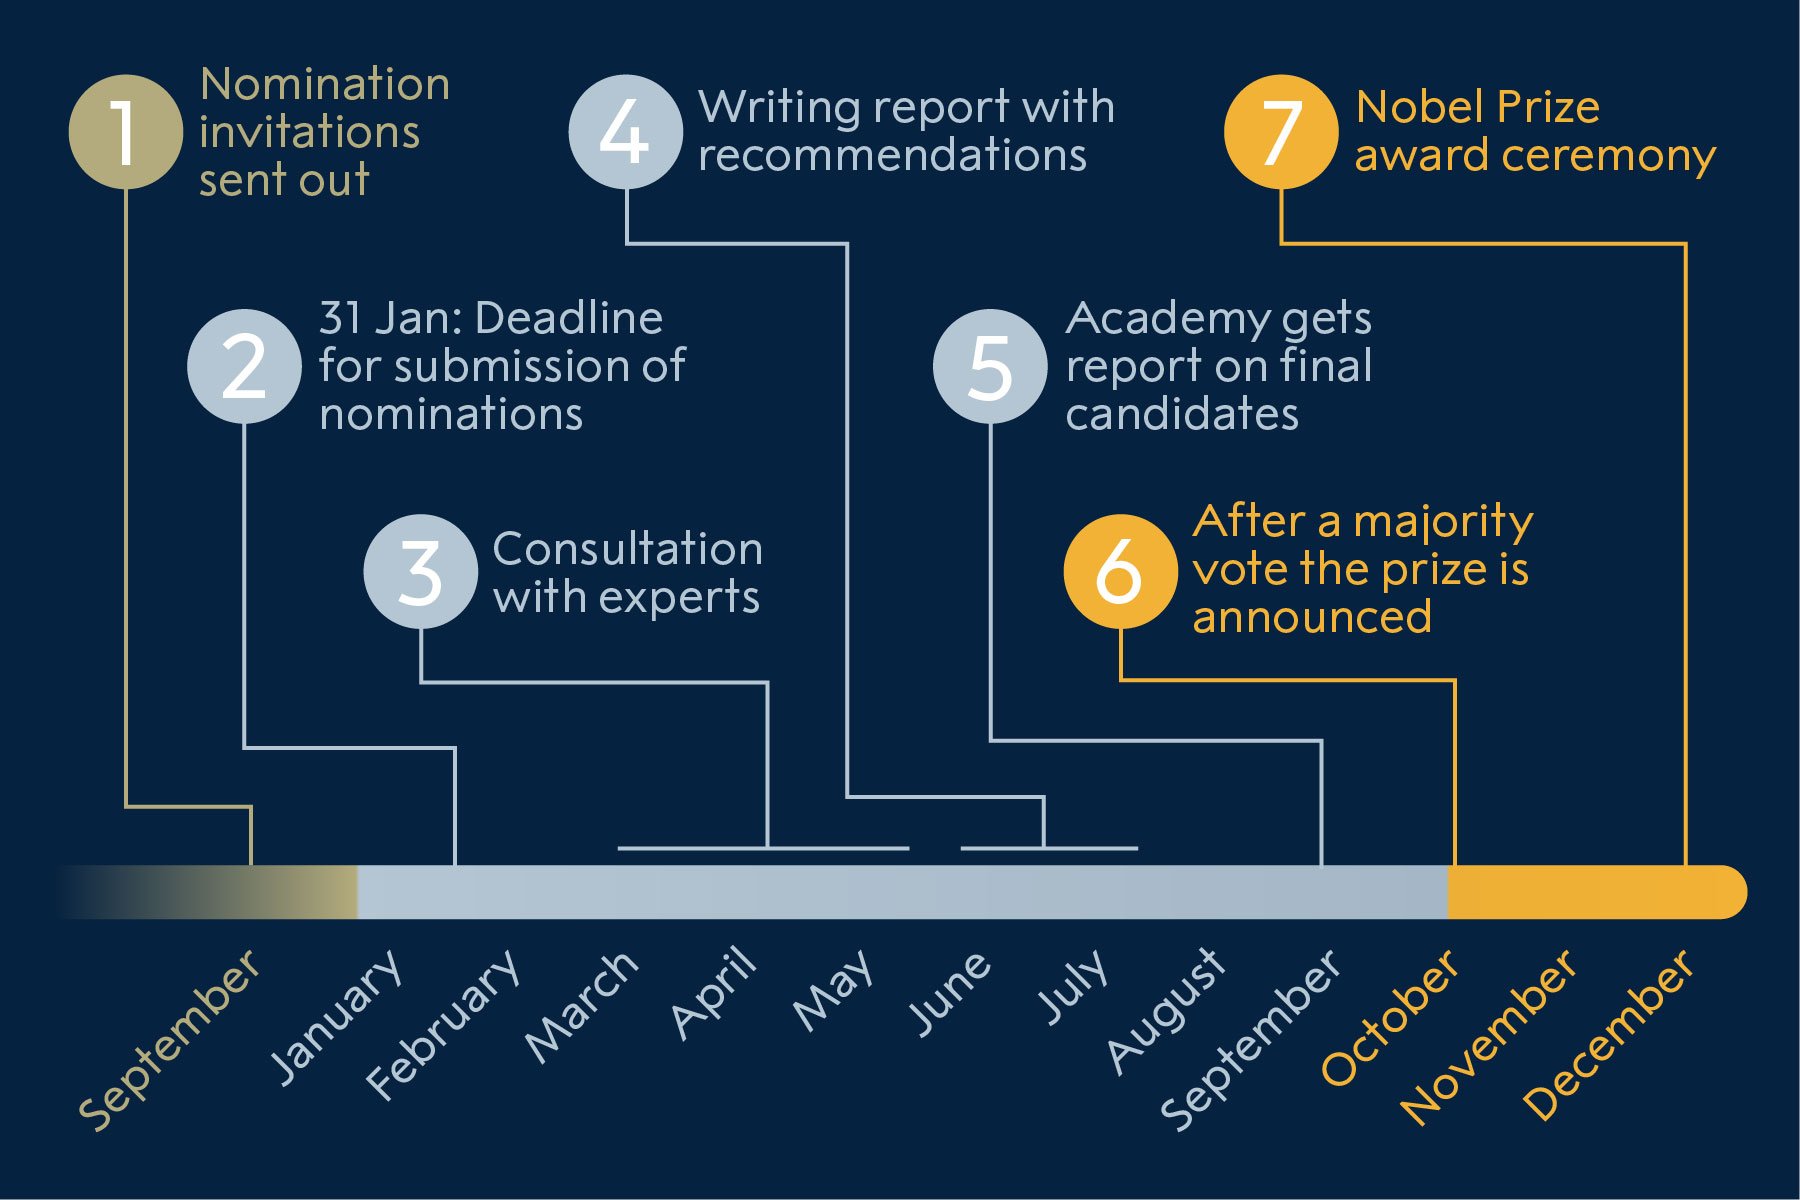 The nomination process for Laureates in Economic Sciences